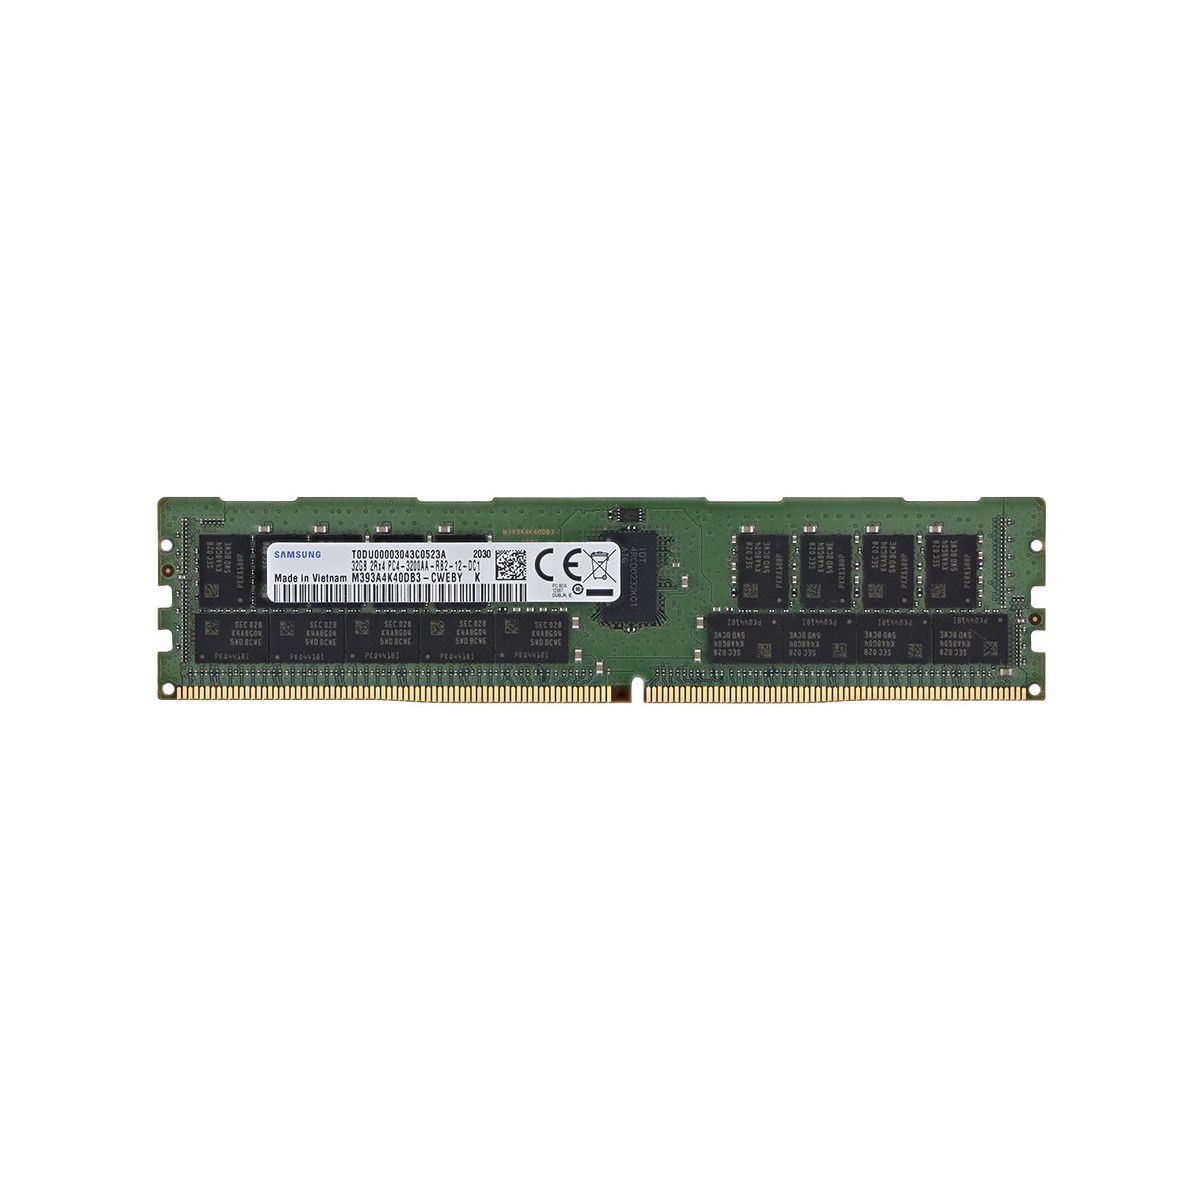 AB214252-MS - Memstar 1x 32GB DDR4-3200 RDIMM PC4-25600R - Mem-Star Kompatybilna pamięć OEM 1 - Memstar 